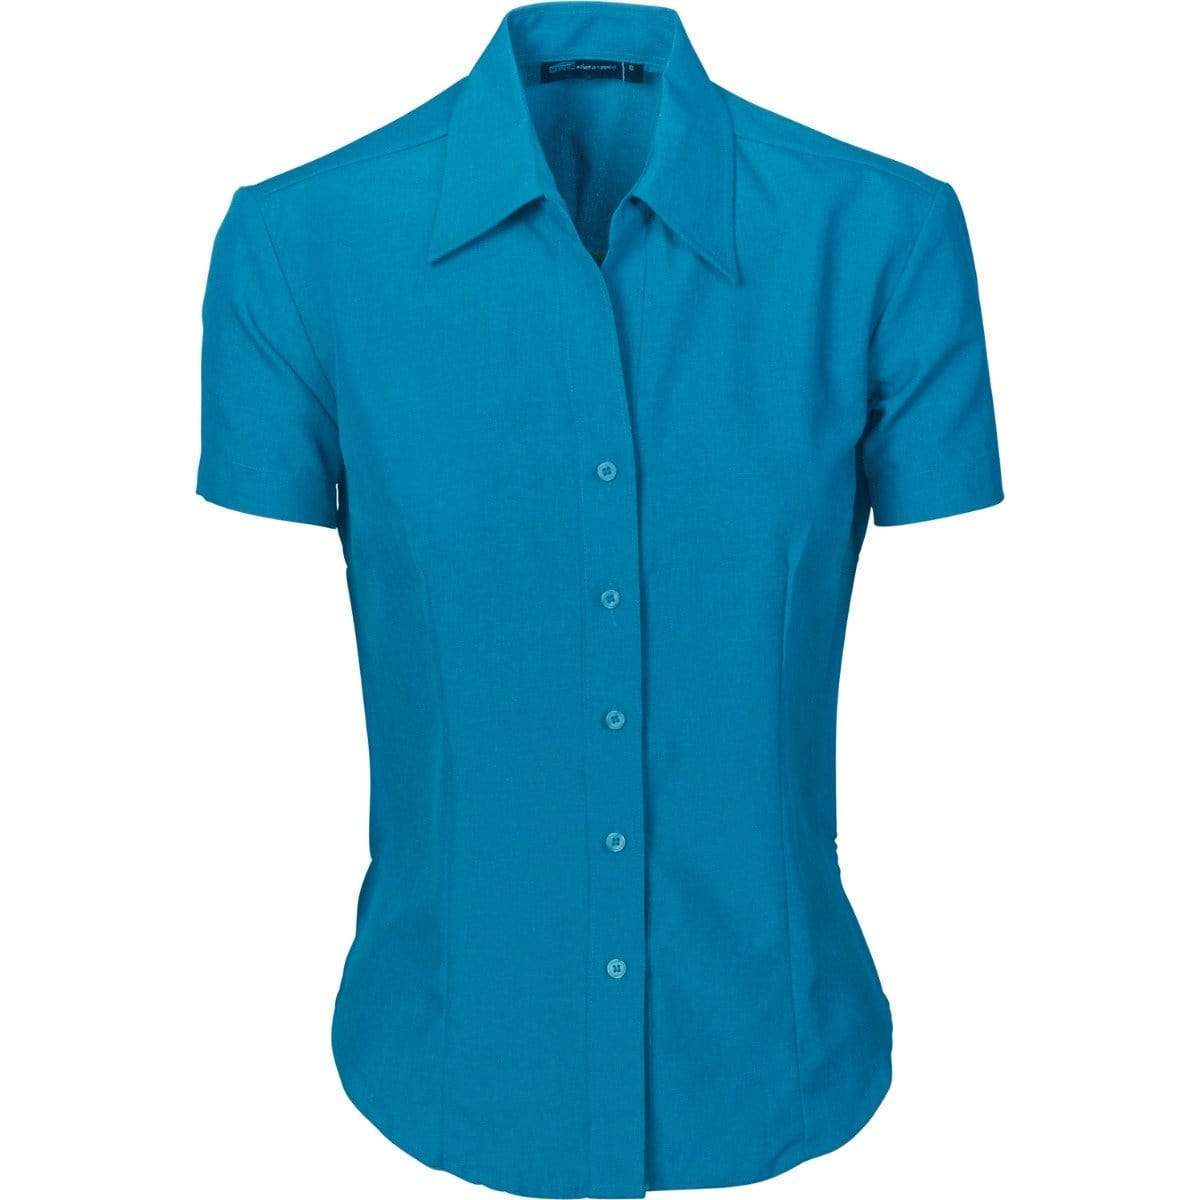 Dnc Workwear Ladies Cool-breathe Short Sleeve Shirt - 4237 Corporate Wear DNC Workwear Teal 6 